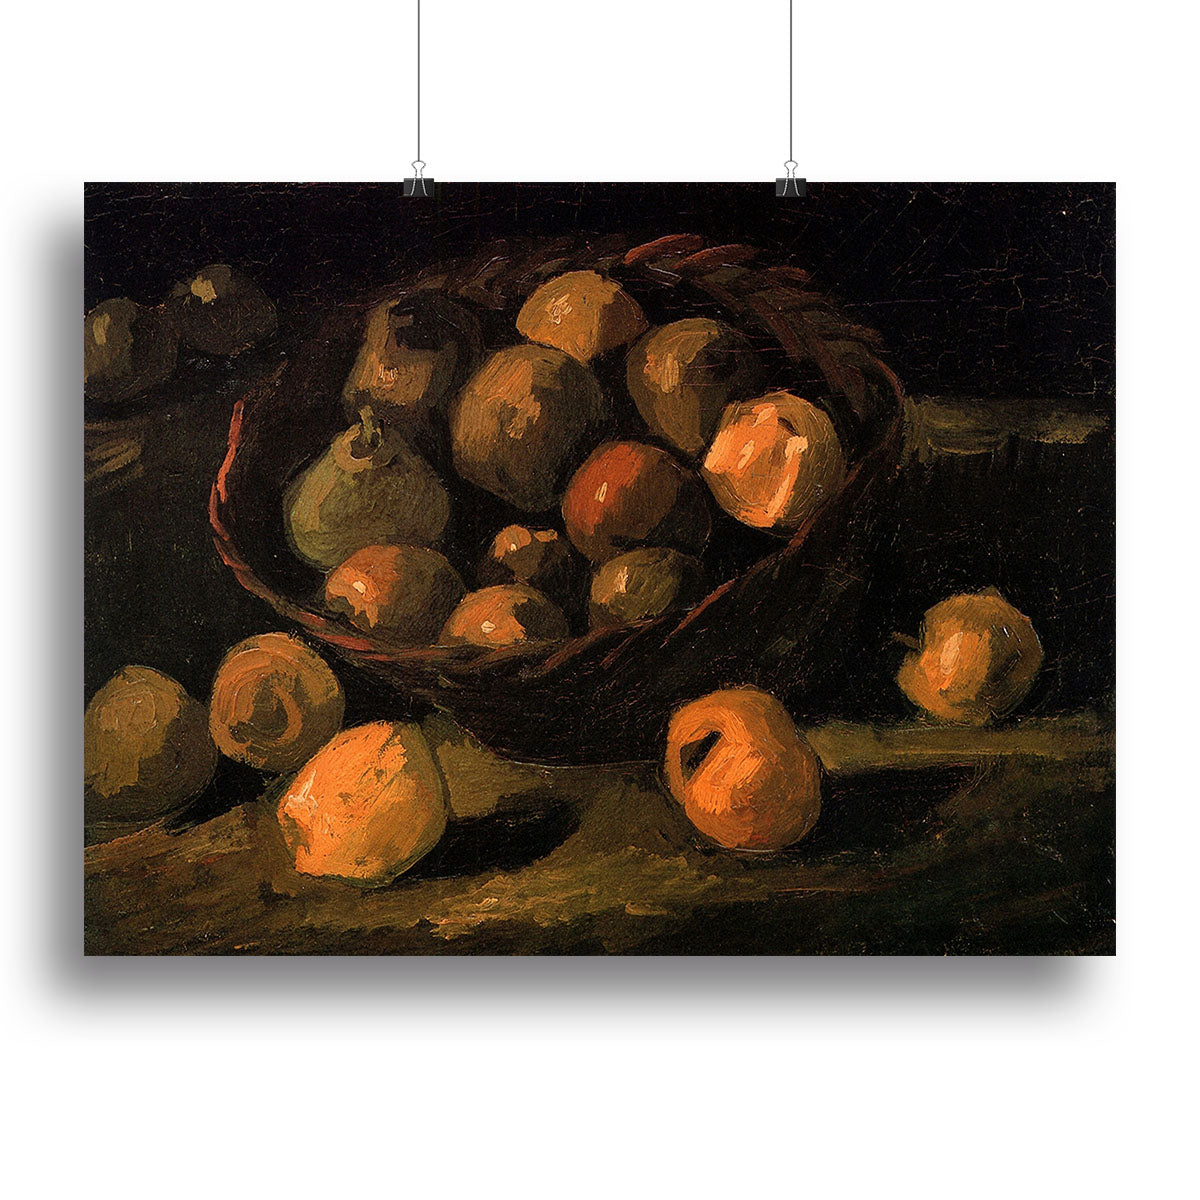 Basket of Apples by Van Gogh Canvas Print or Poster - Canvas Art Rocks - 2